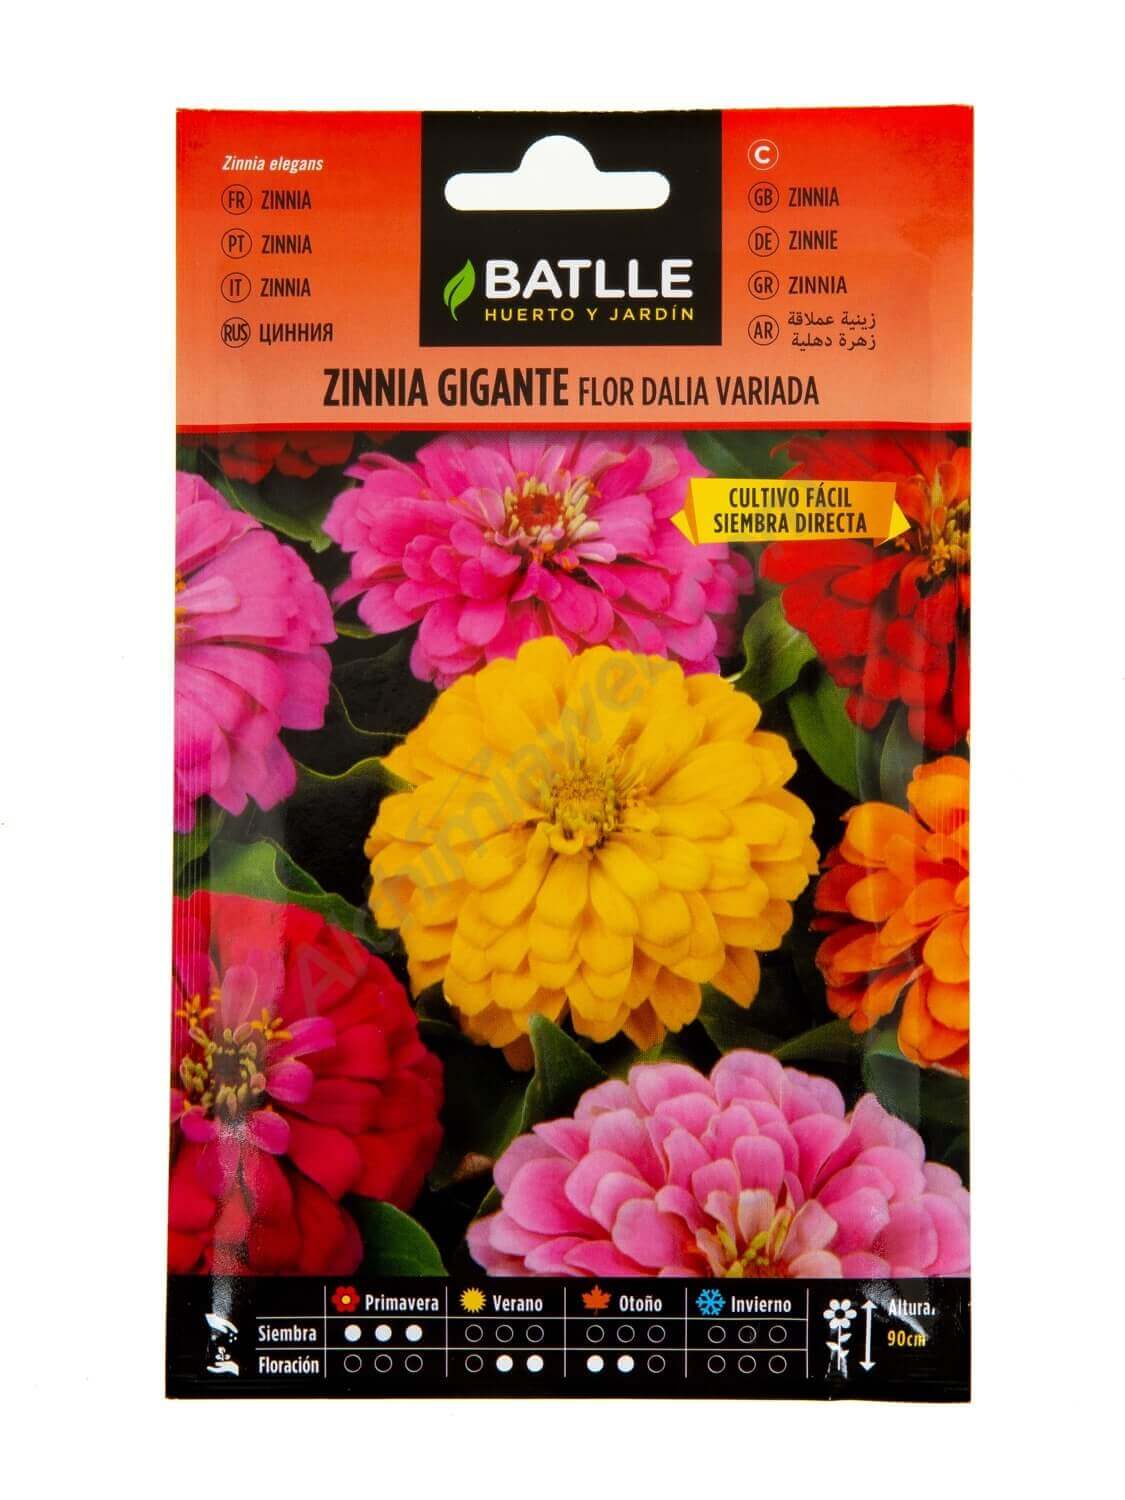 Venta de semillas de Zinnia Gigante Flor de Dalia - Batlle